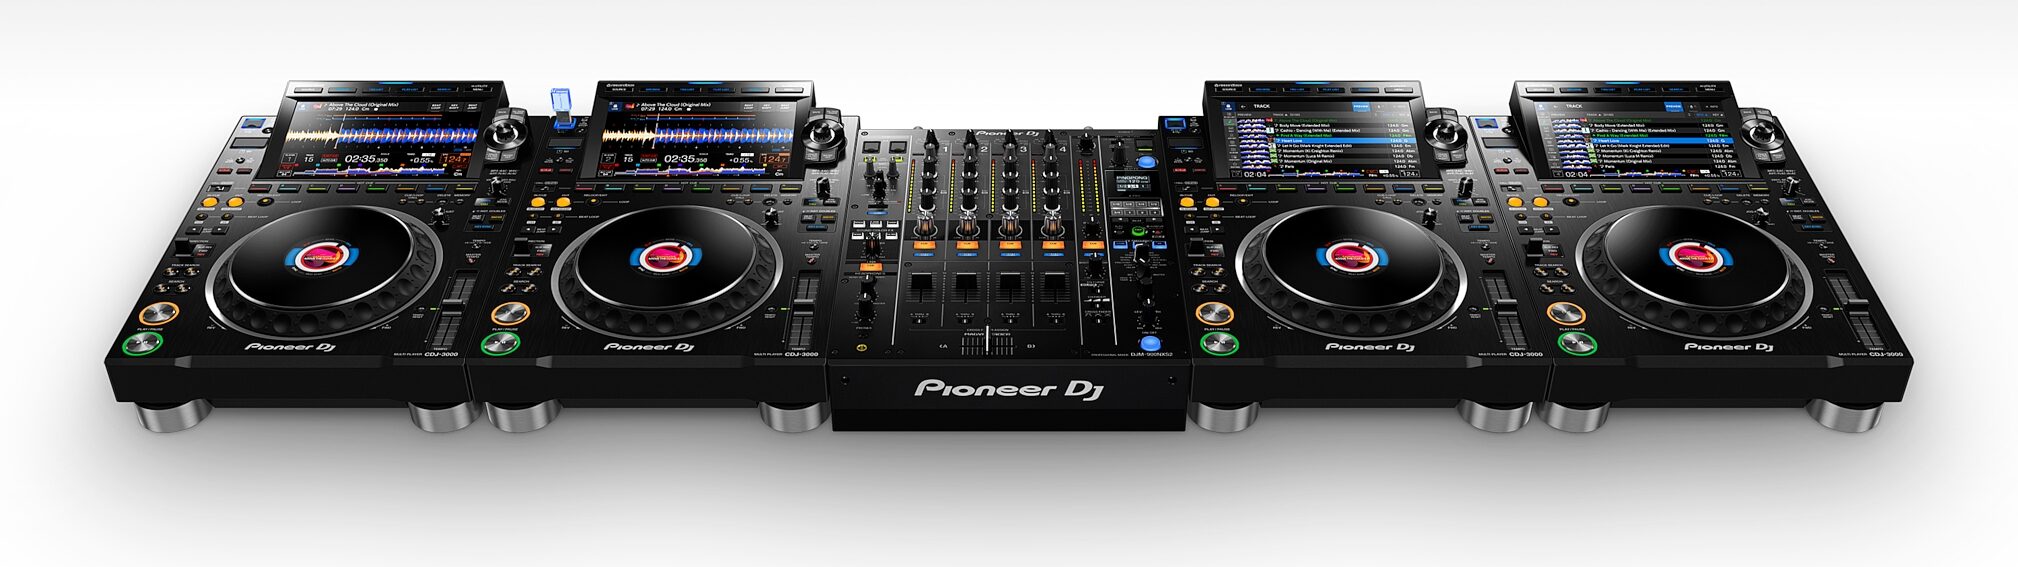 Pioneer DJ CDJ-3000 Professional Media Player, Black